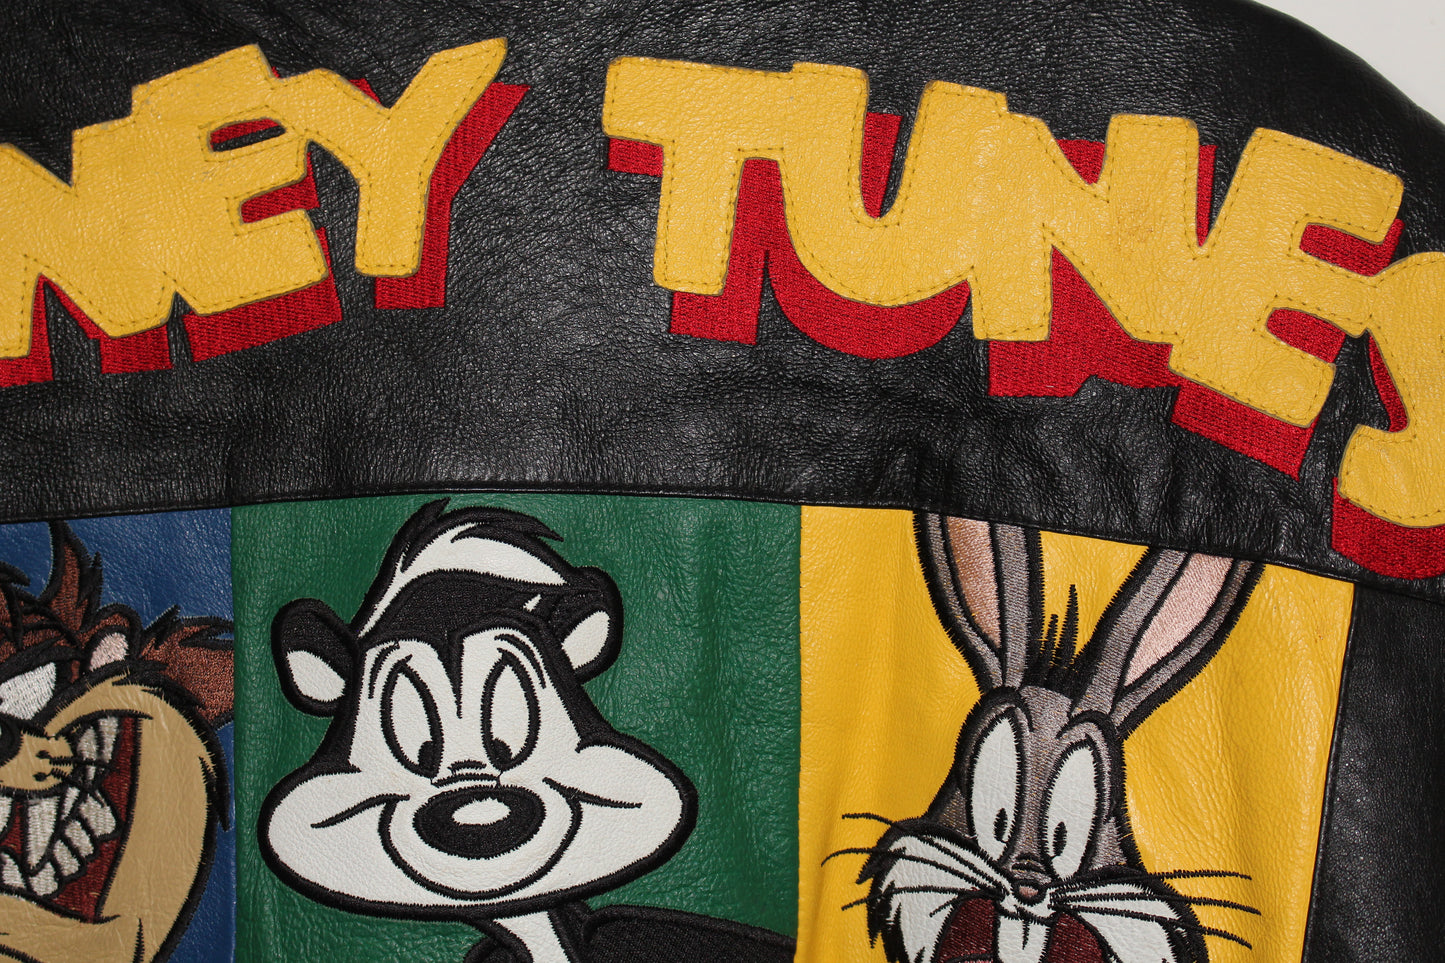 Rare 1997 Warner Bros Looney Tunes Leather Jacket (L)